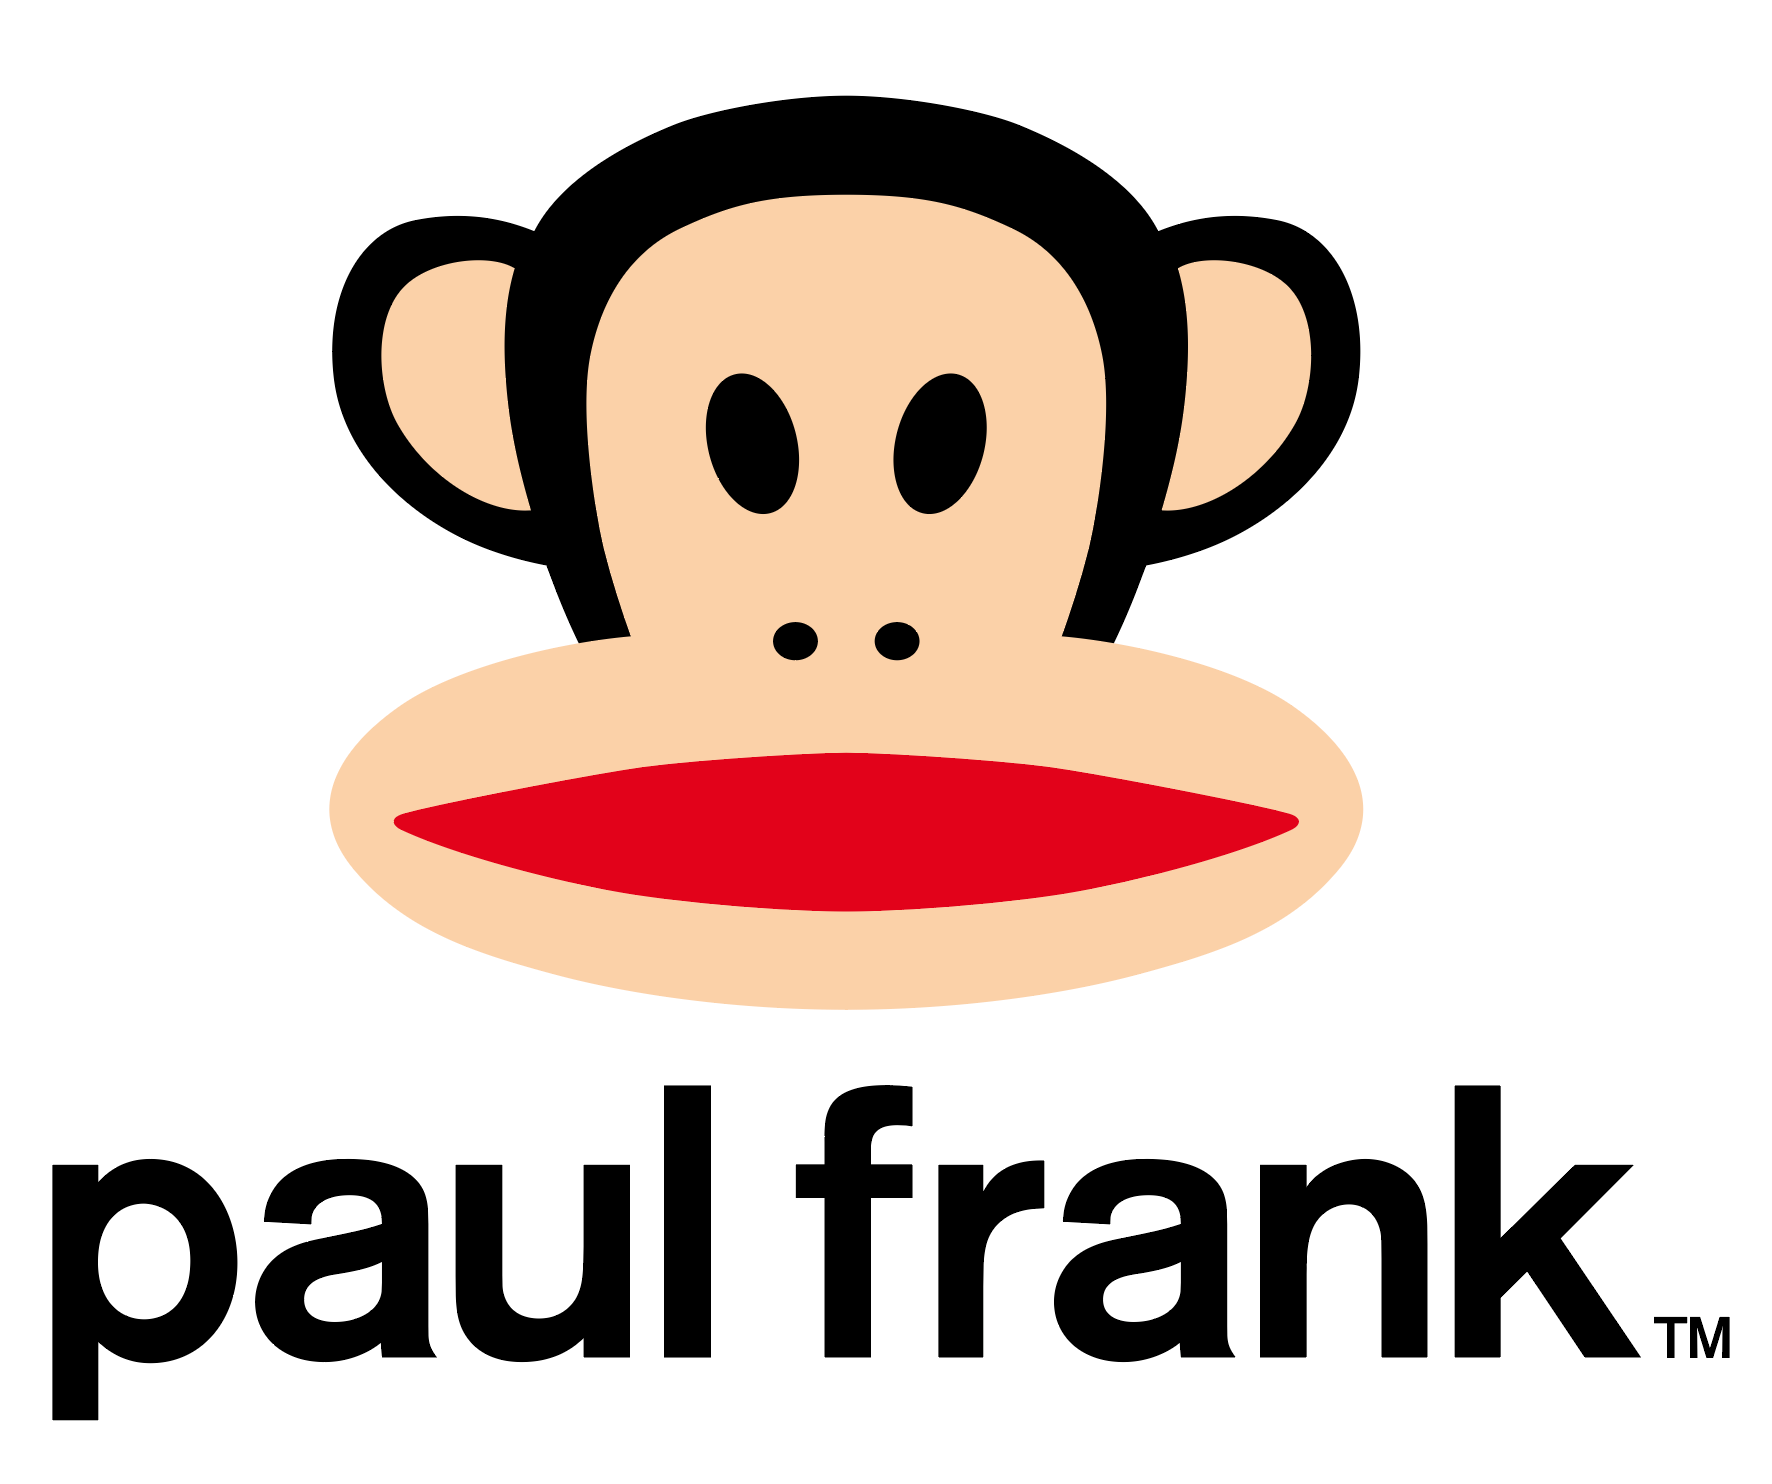 julius the monkey with Paul Frank logo on white background